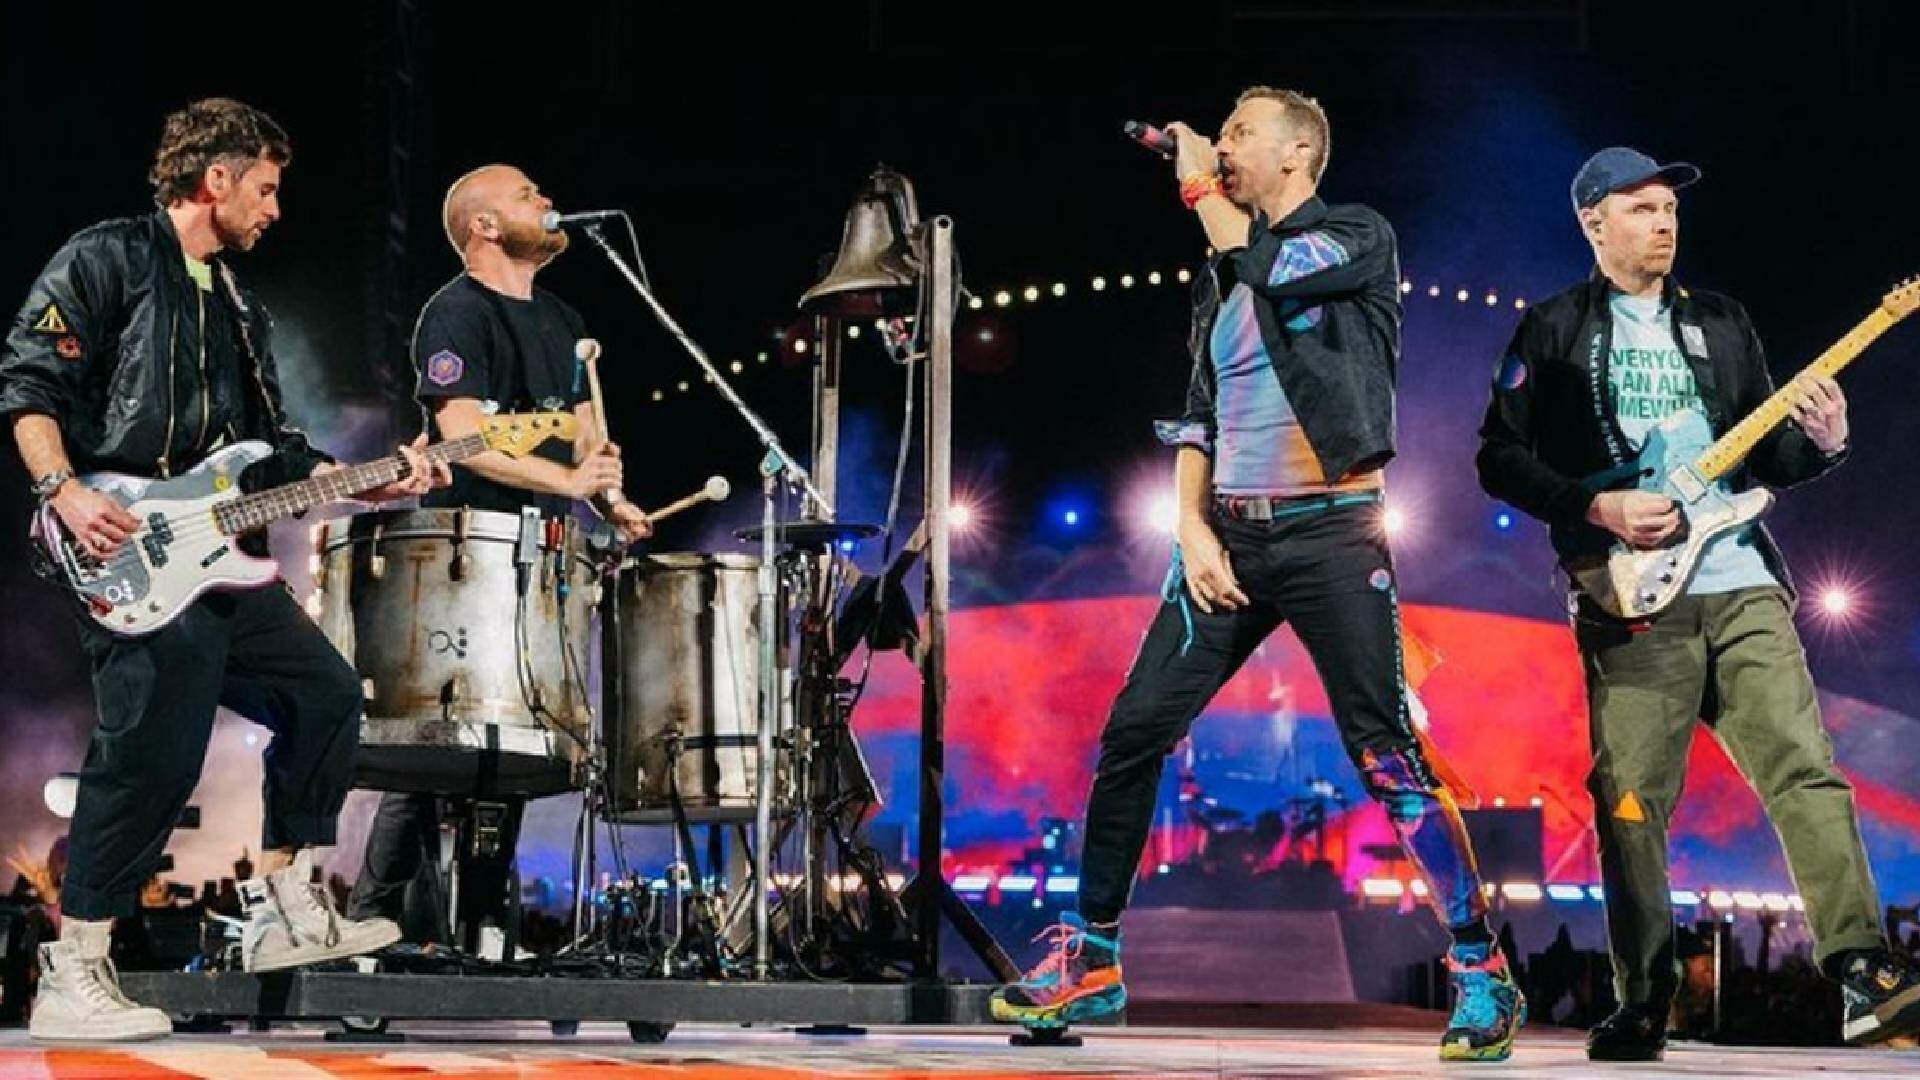 Após adiar shows, Coldplay anuncia novidades da turnê “Music Of The Spheres World” no Brasil  - Metropolitana FM